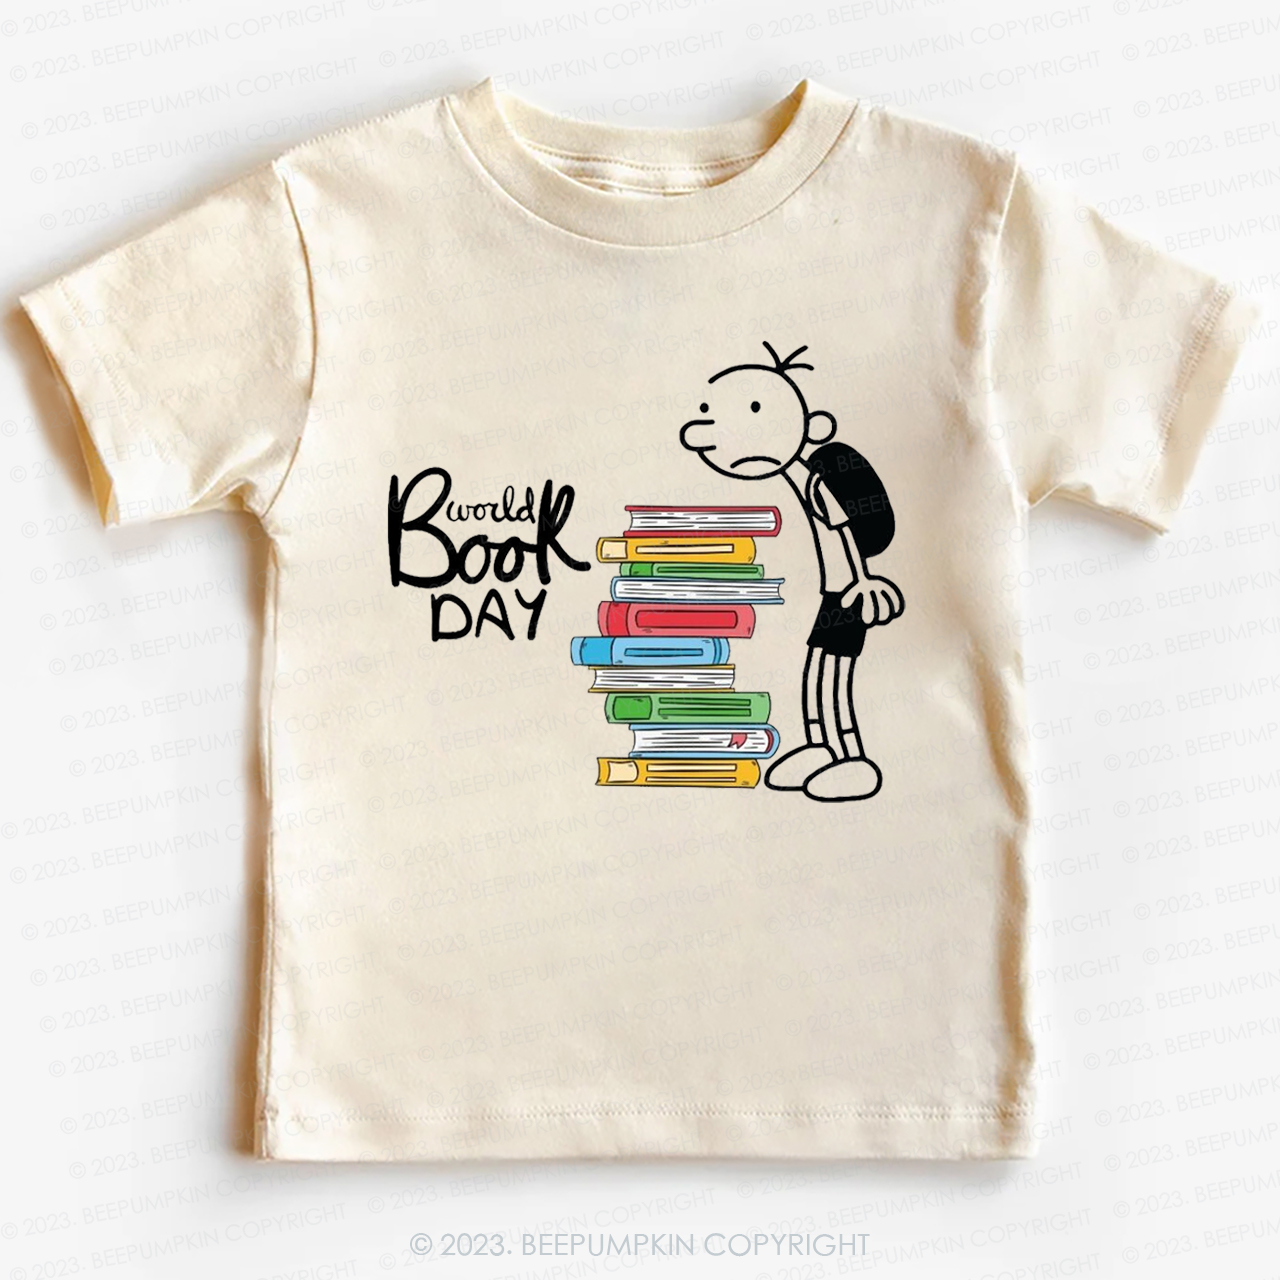 World Book Day Wimpy Kids Shirt